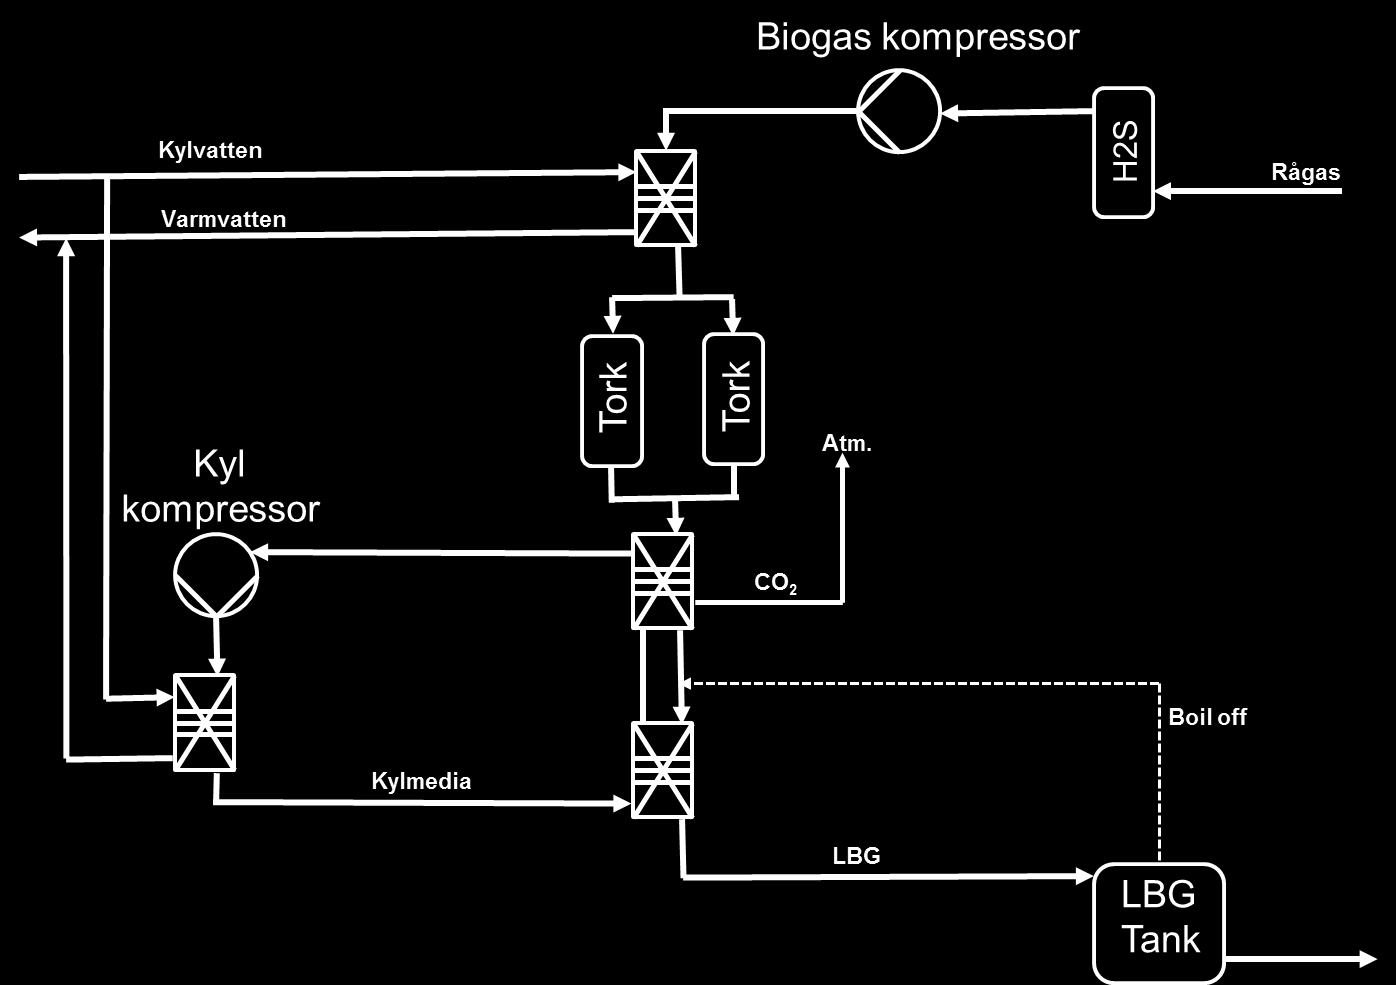 Biofrigas unika kryoteknik Energimängd 2 GWh/år Bränsleeffekt 0,2 MW Levererat flöde LBG 17 kg/h